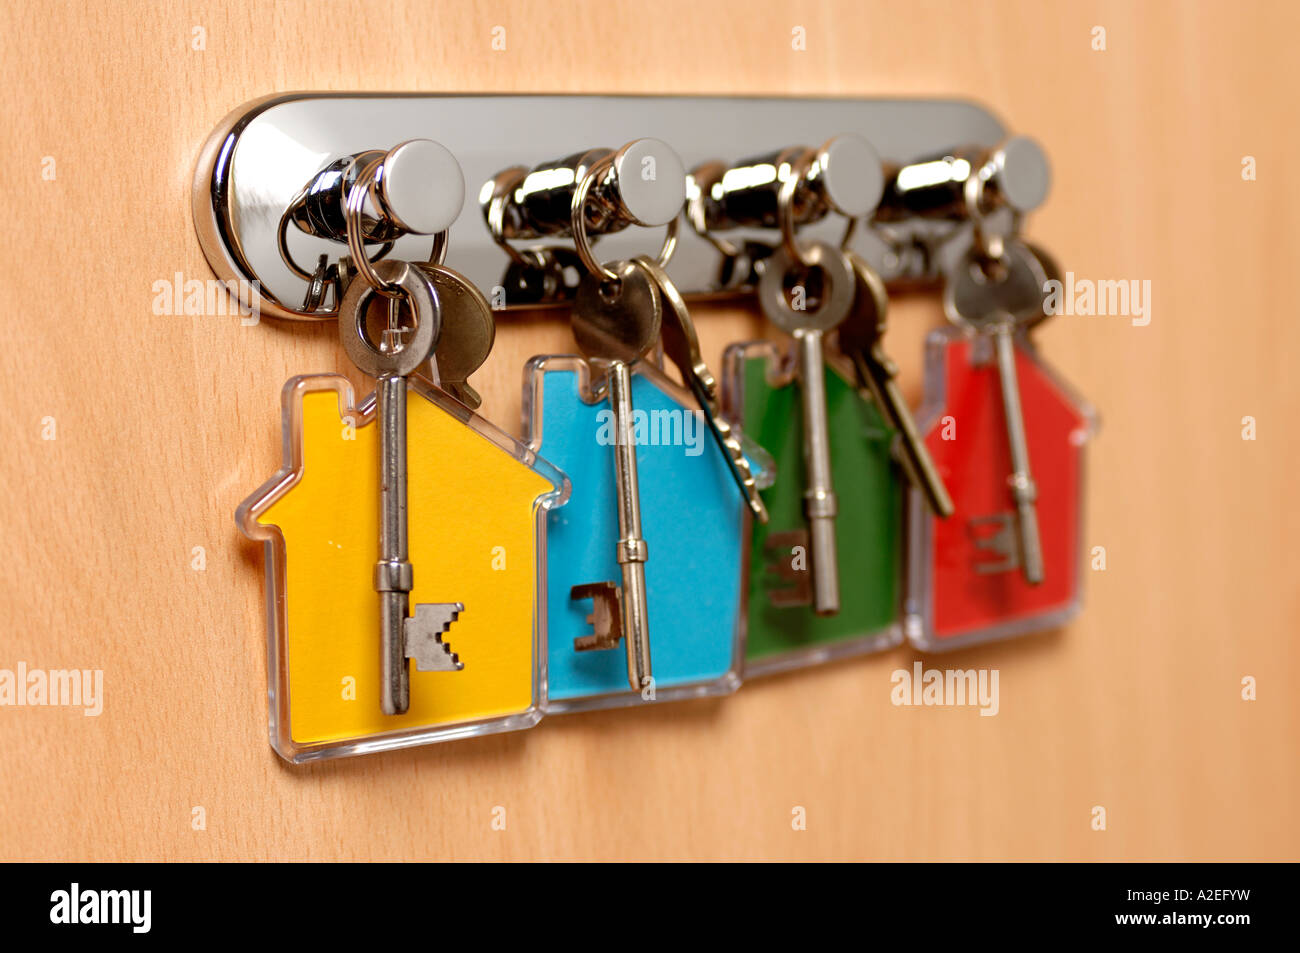 House keys and keyrings Stock Photo